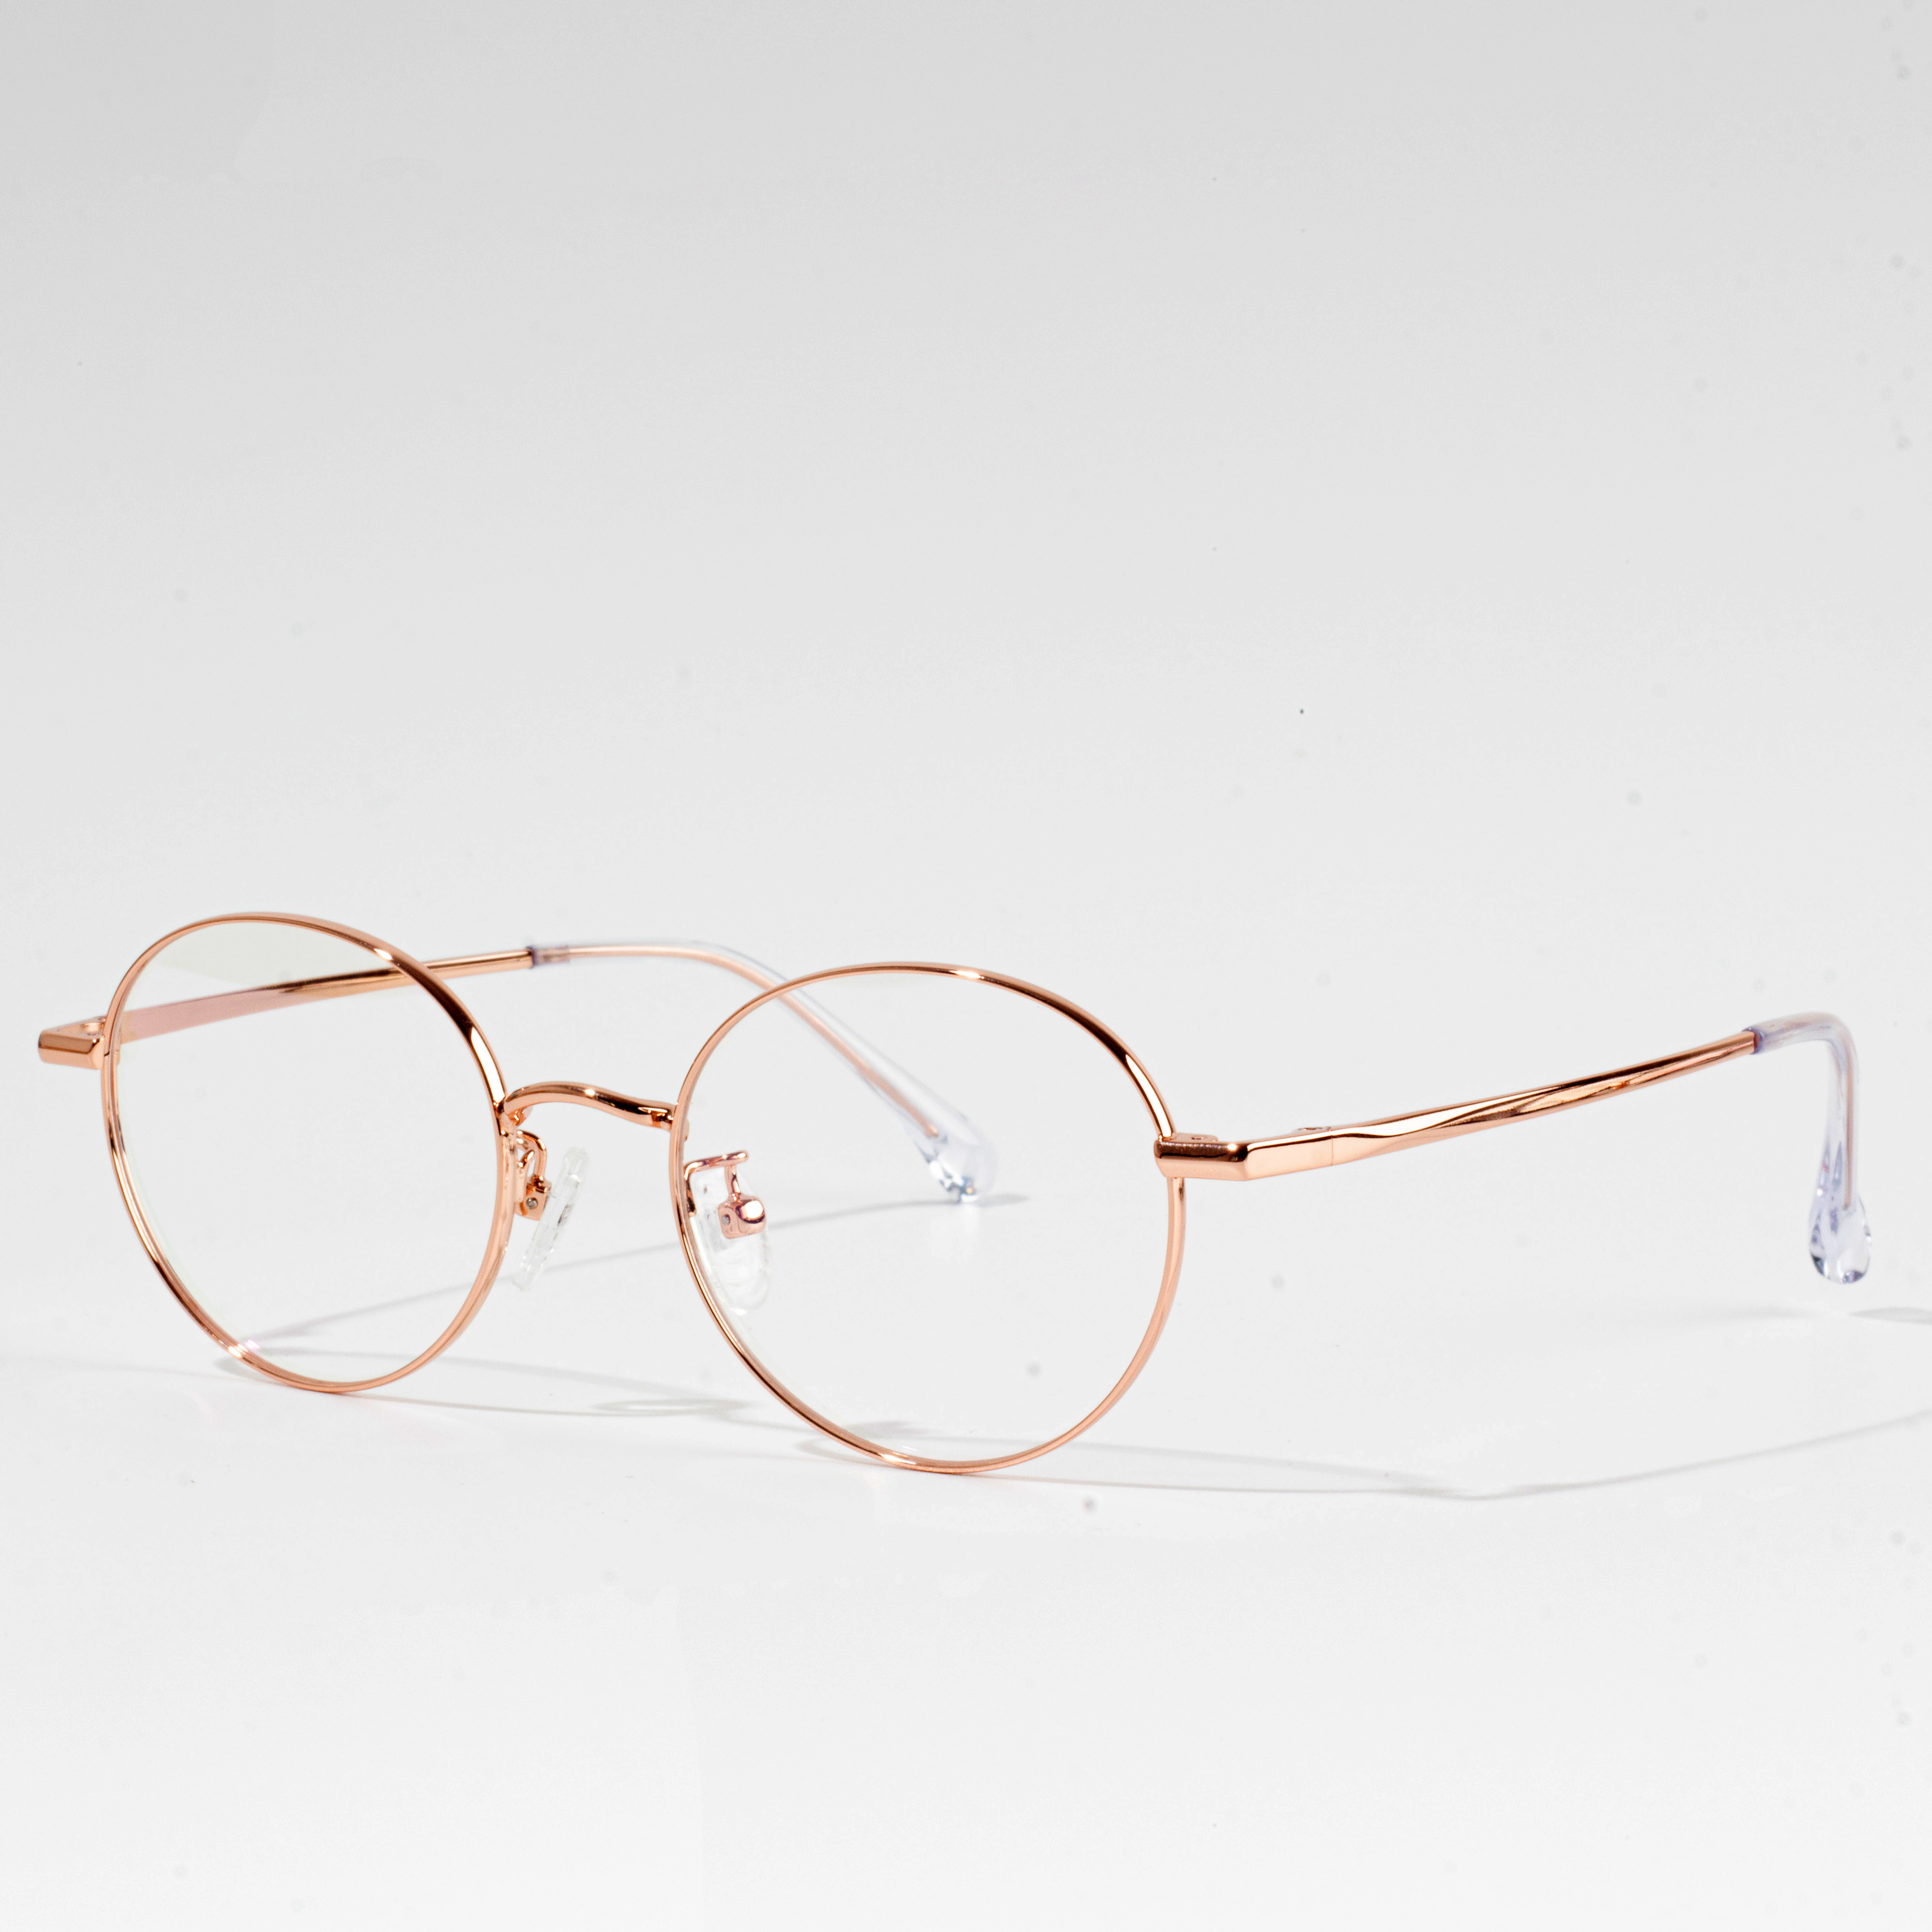 metal frames for eyeglasses